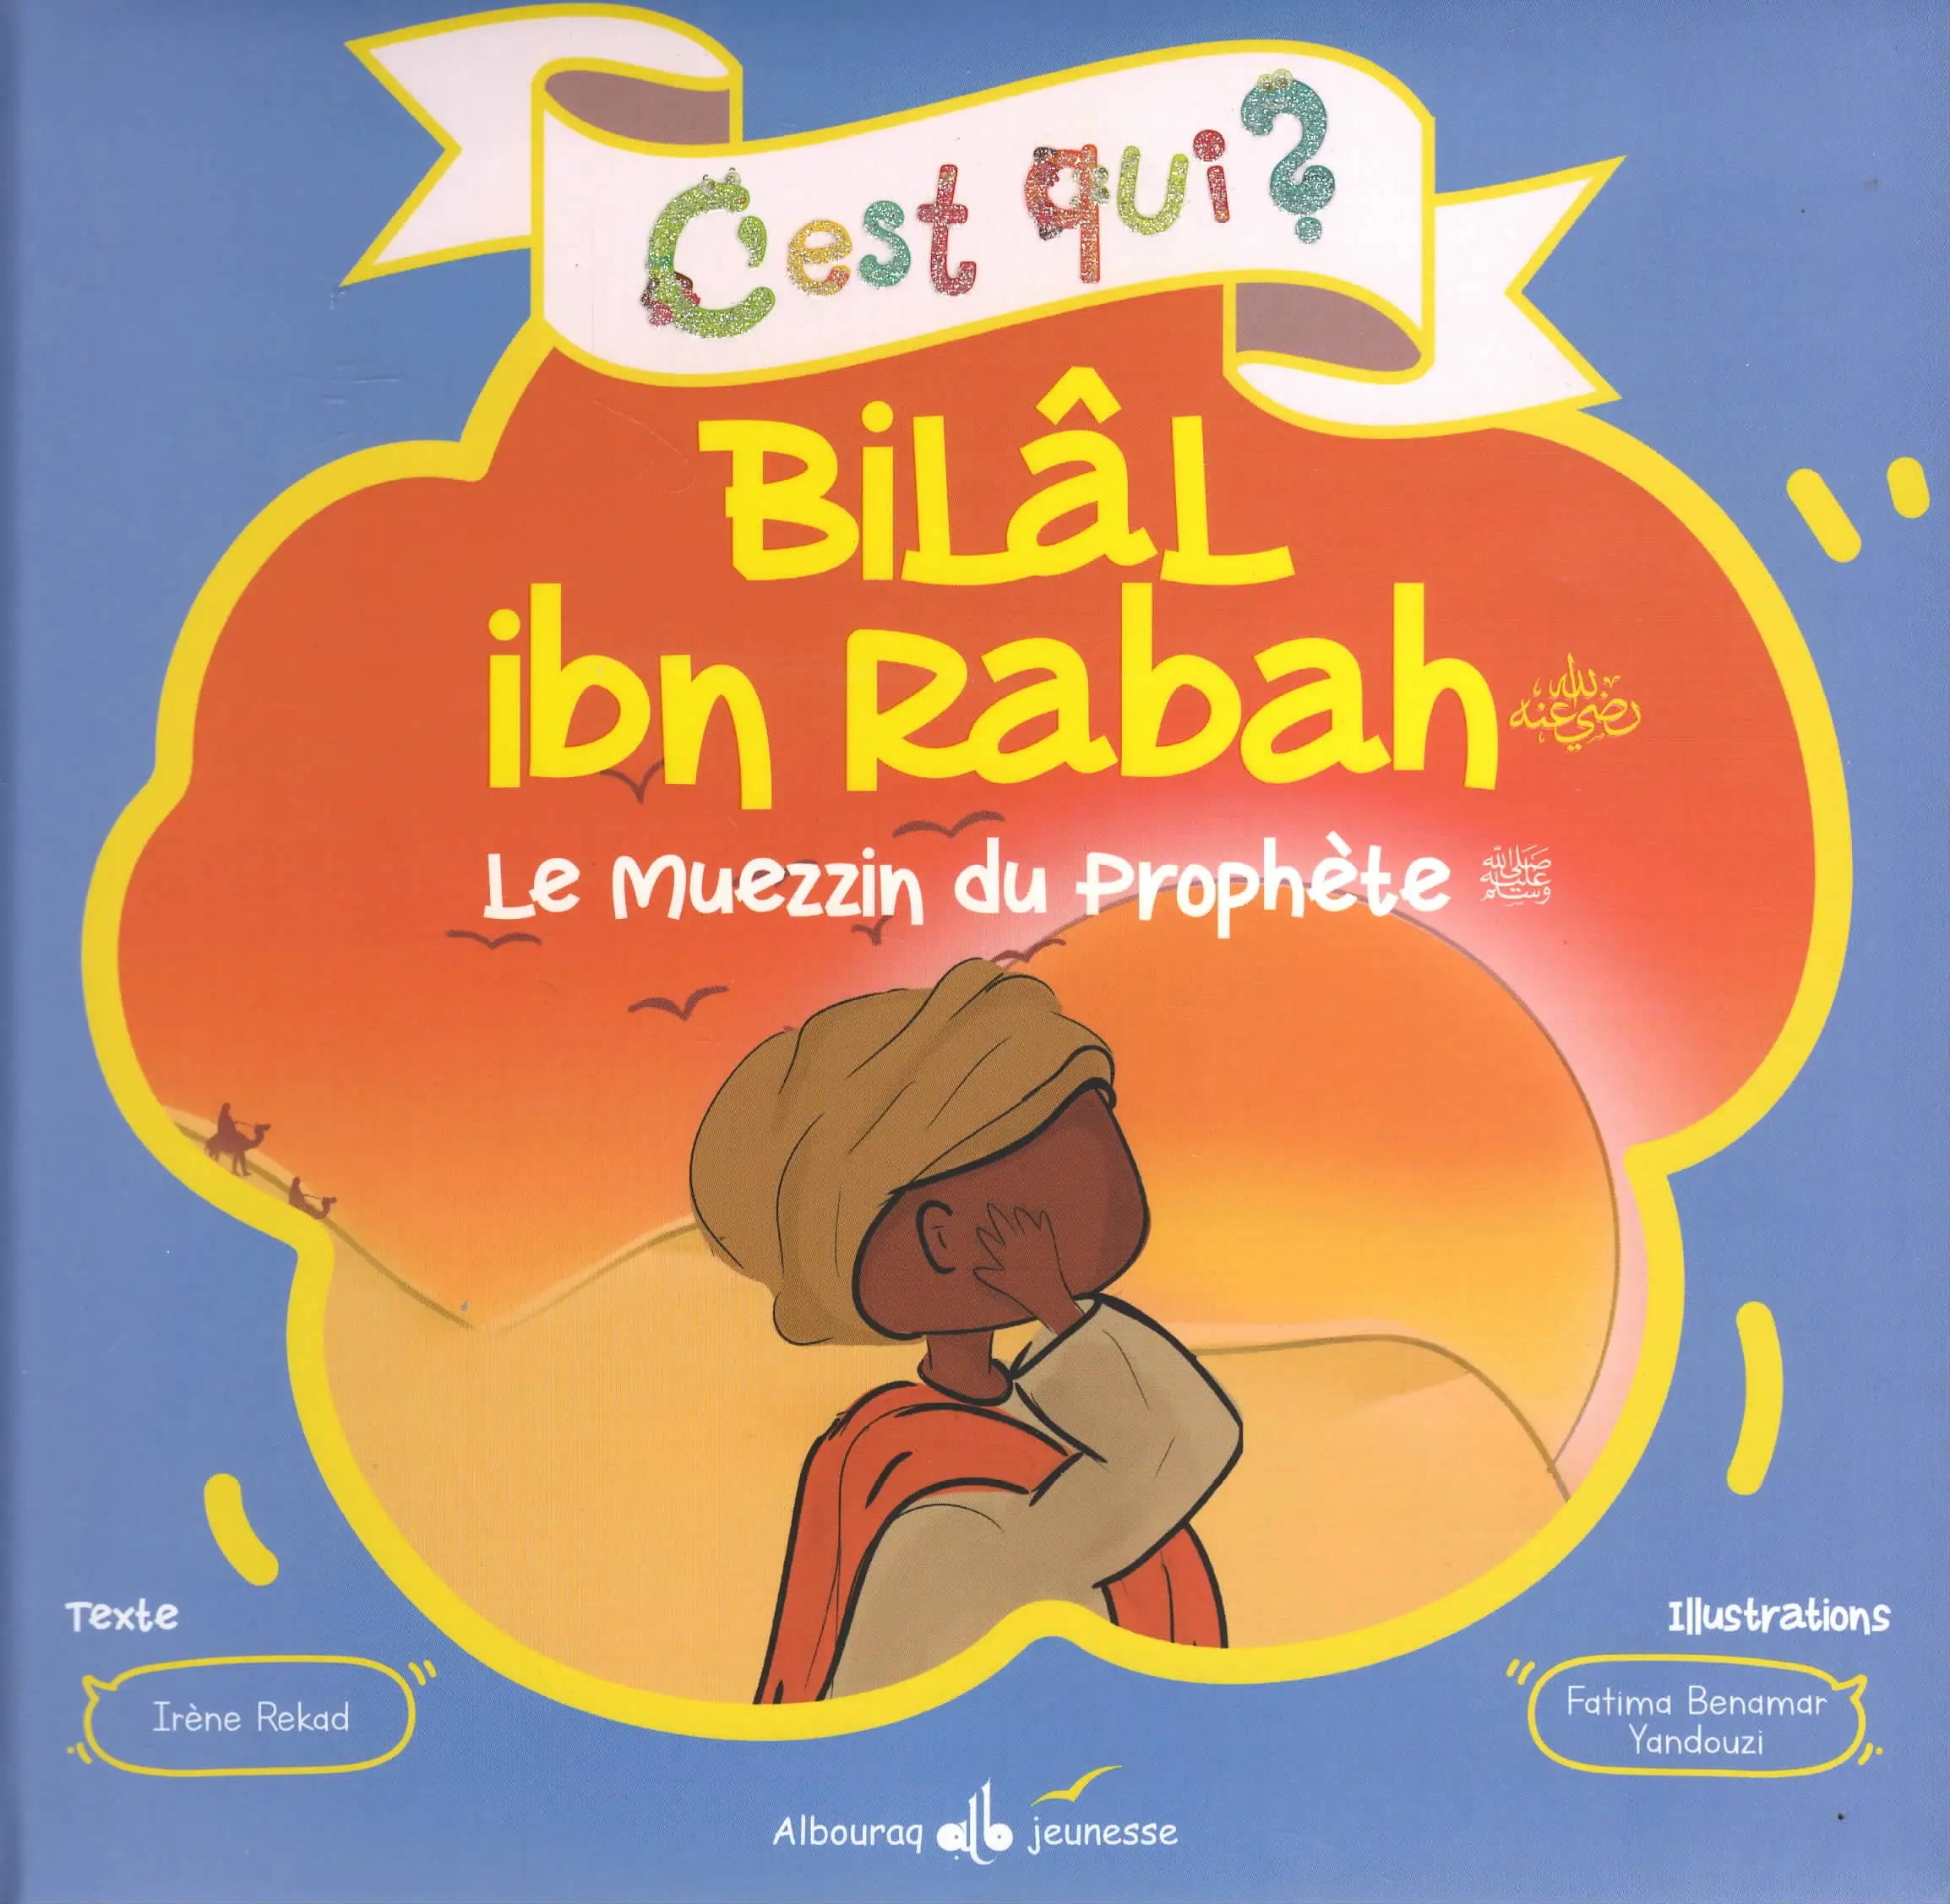 C’est qui ? Bilal ibn Rabah par Irène Rekad - Albouraq Jeunesse